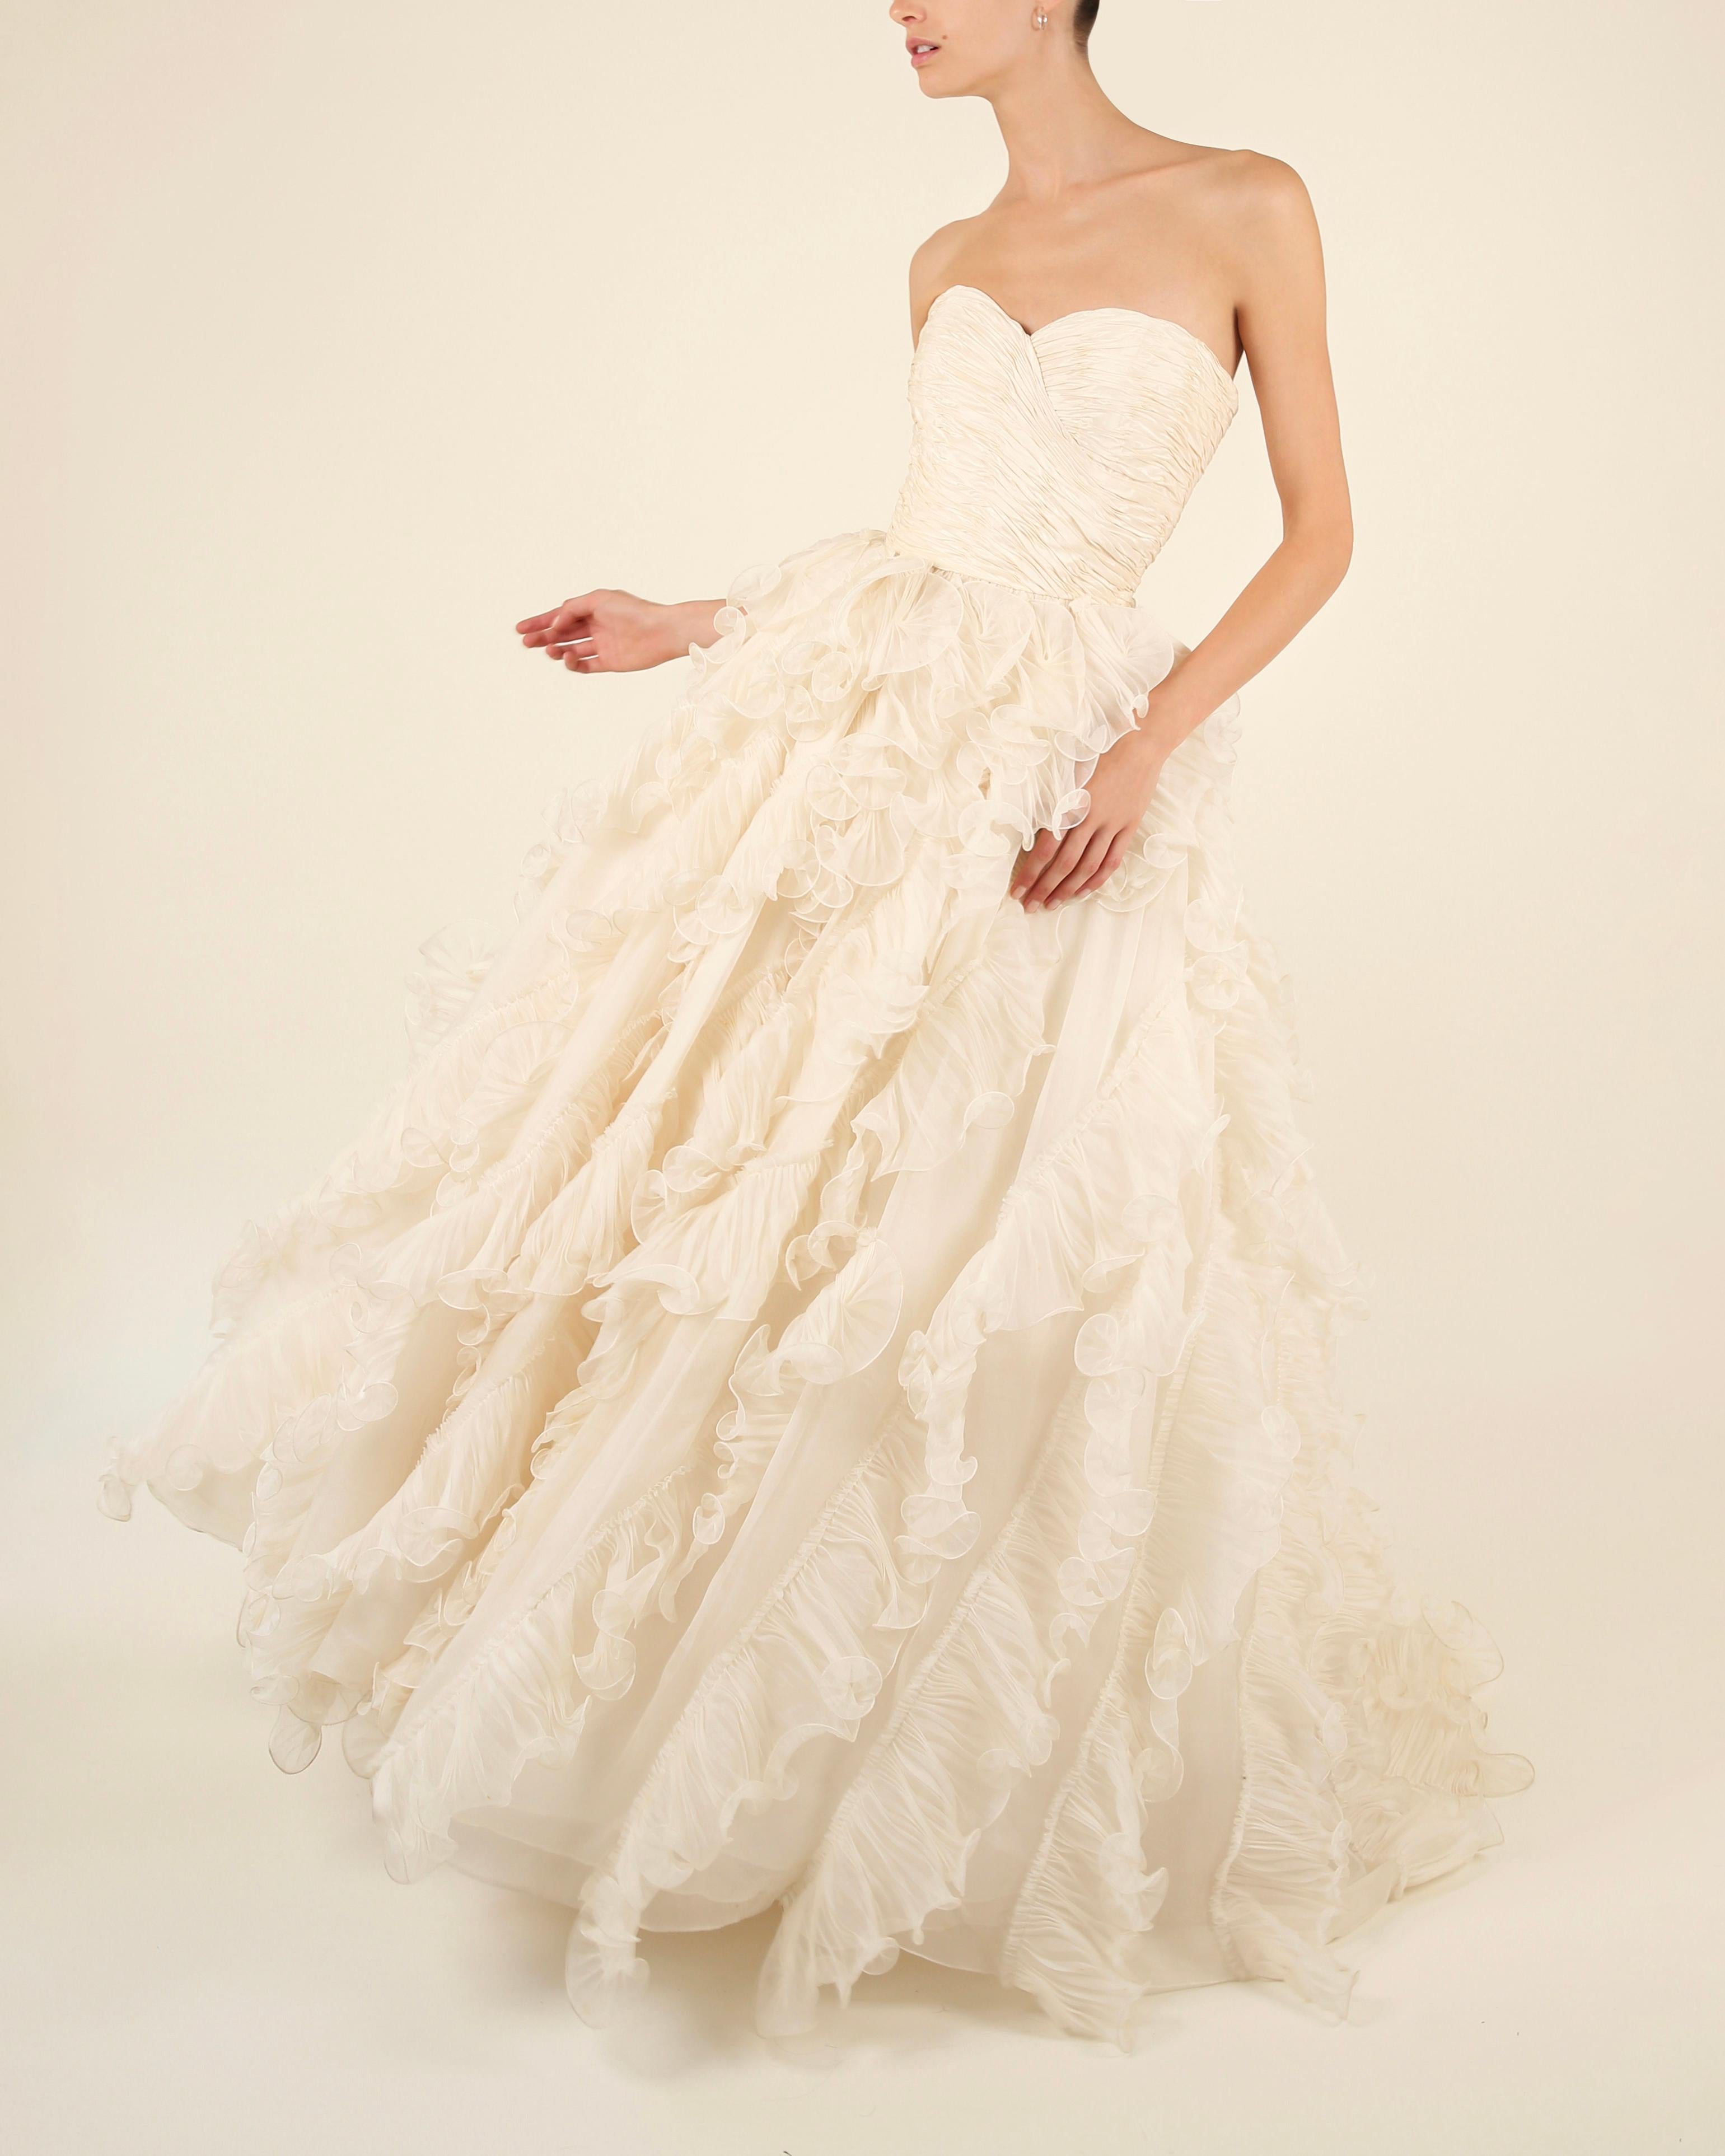 Oscar de la Renta S/S08 bridal ivory strapless vintage ruffle wedding dress gown For Sale 5